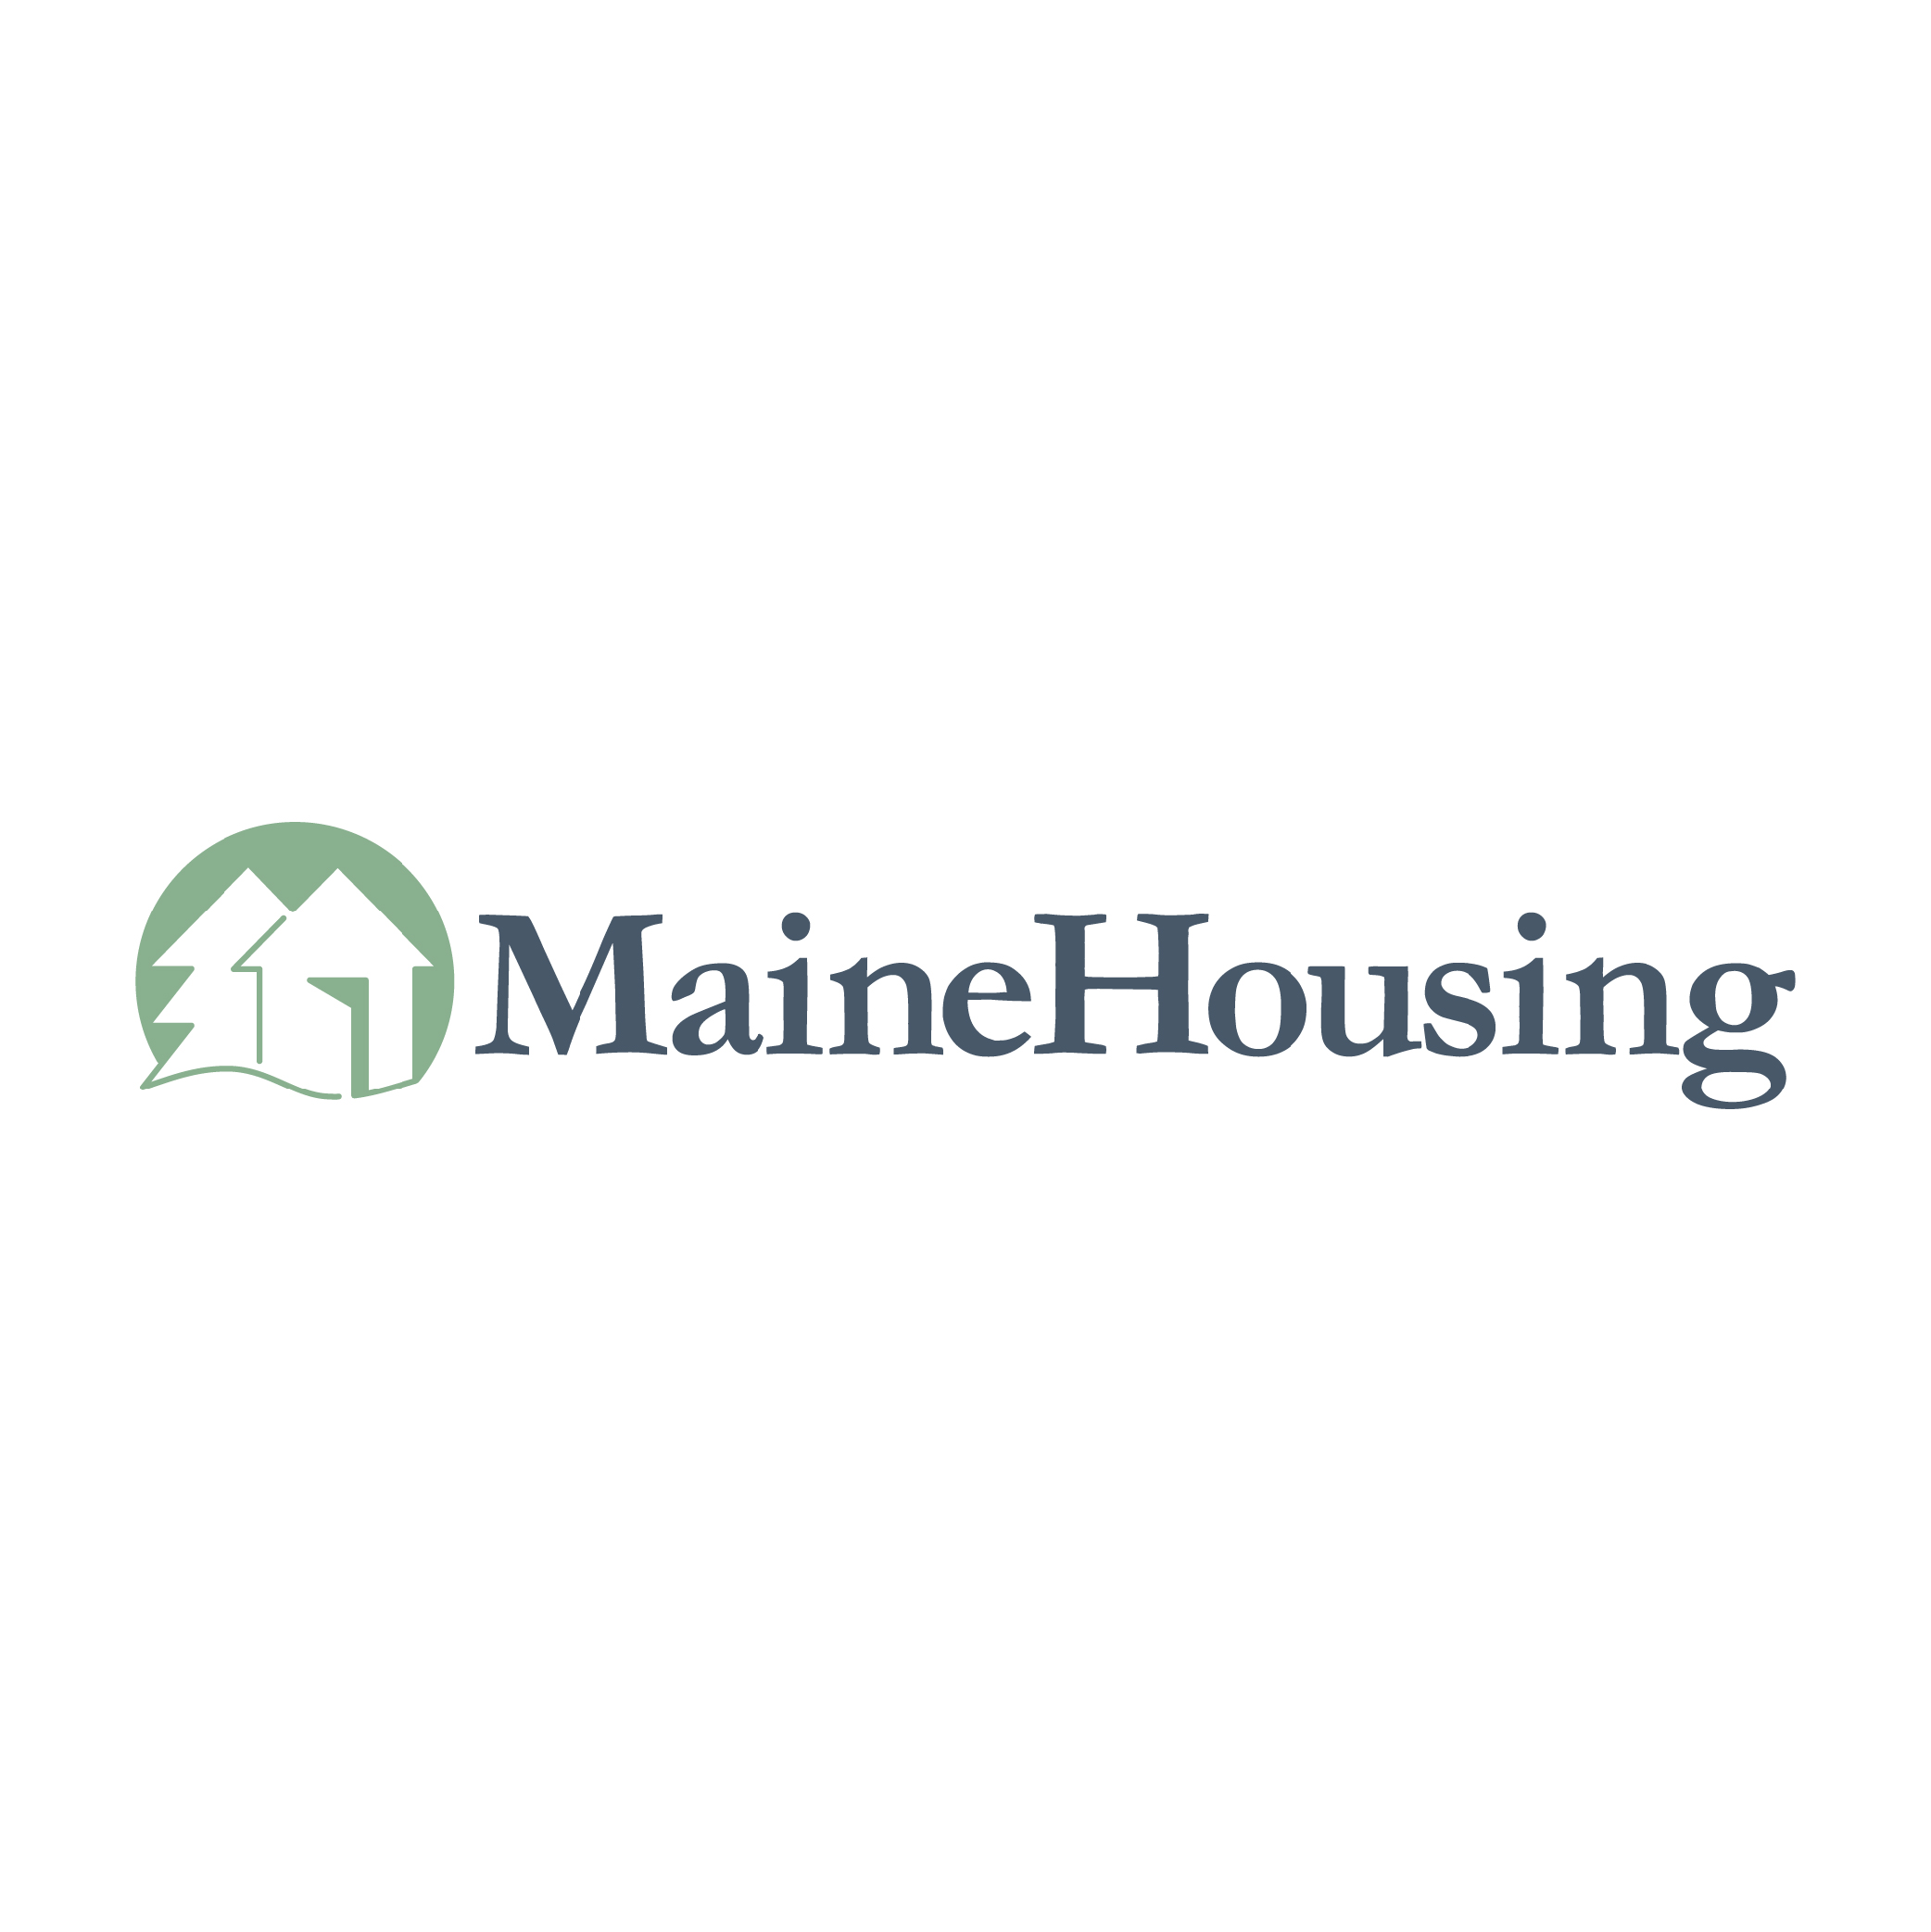 MaineHousing logo